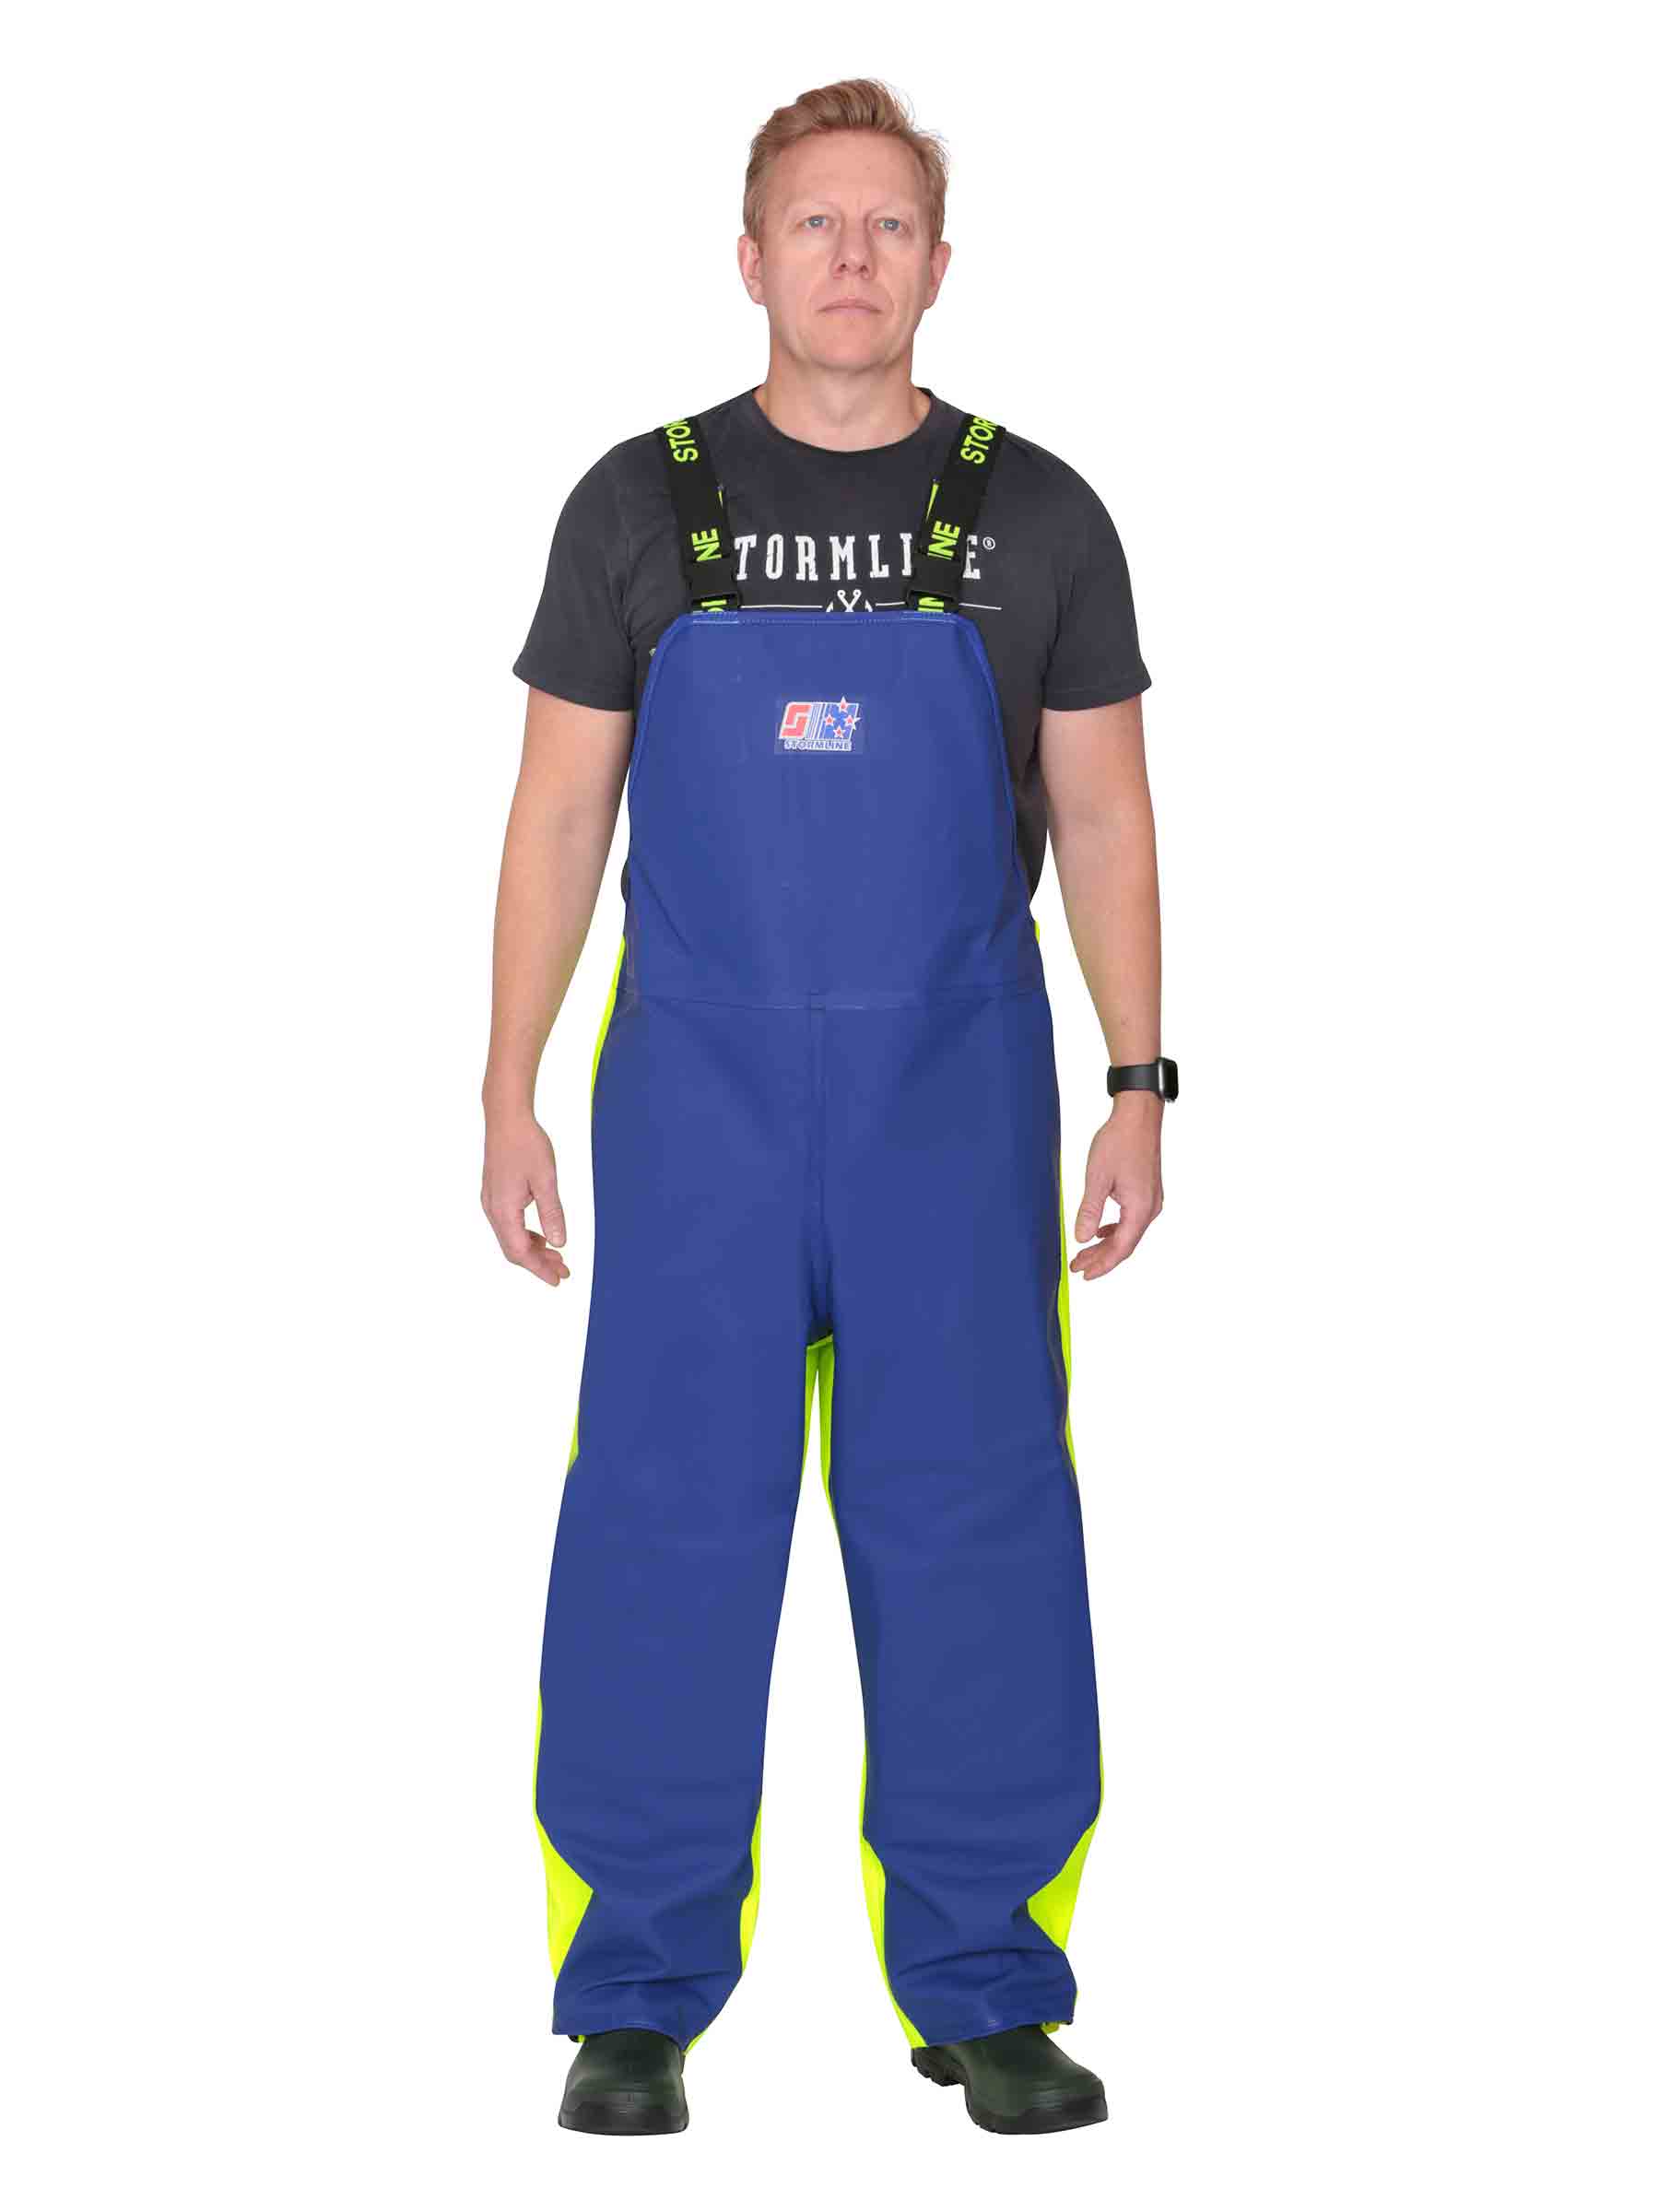 Stormline Crew 654 Heavy Duty PVC Bib and Brace Pants, Medium (M) Neon/Blue